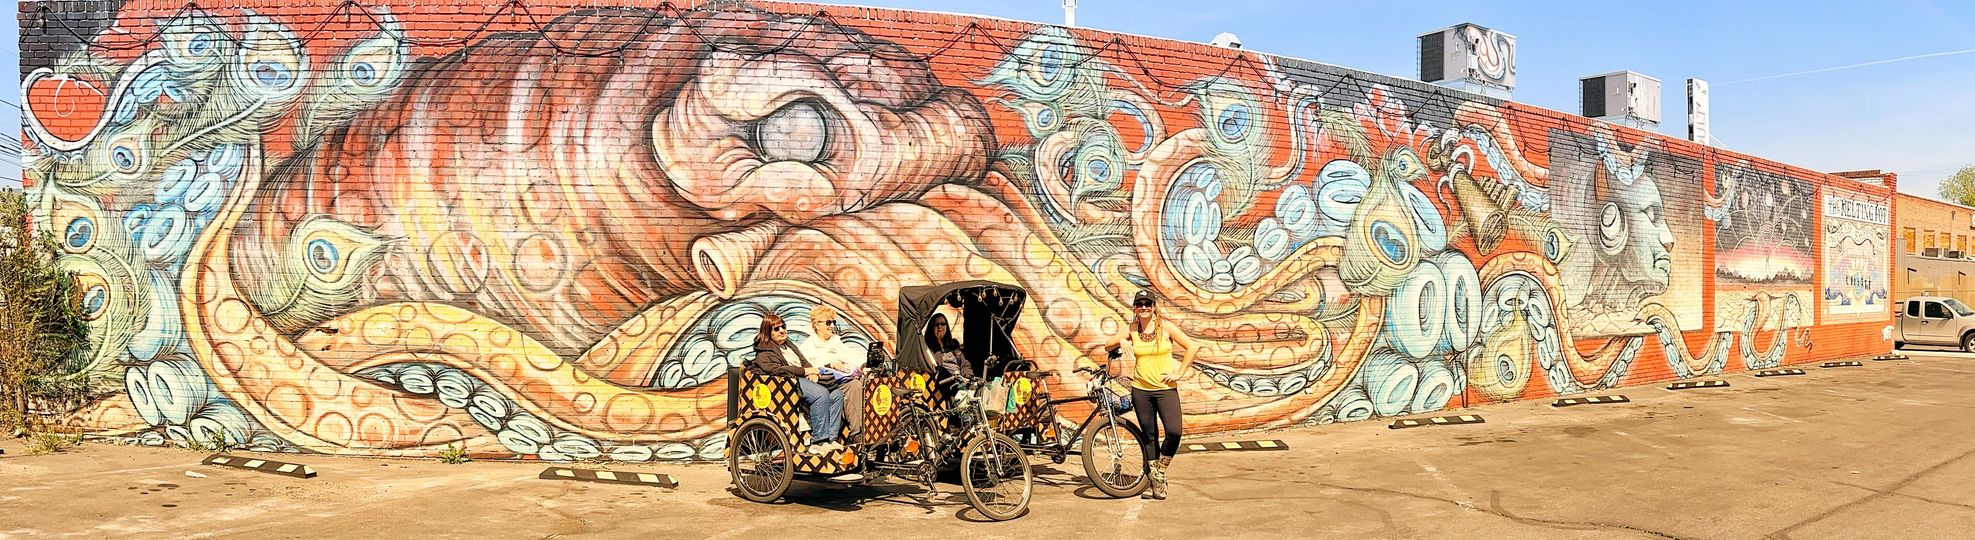 Pineapple Pedicab in front of Reno mural